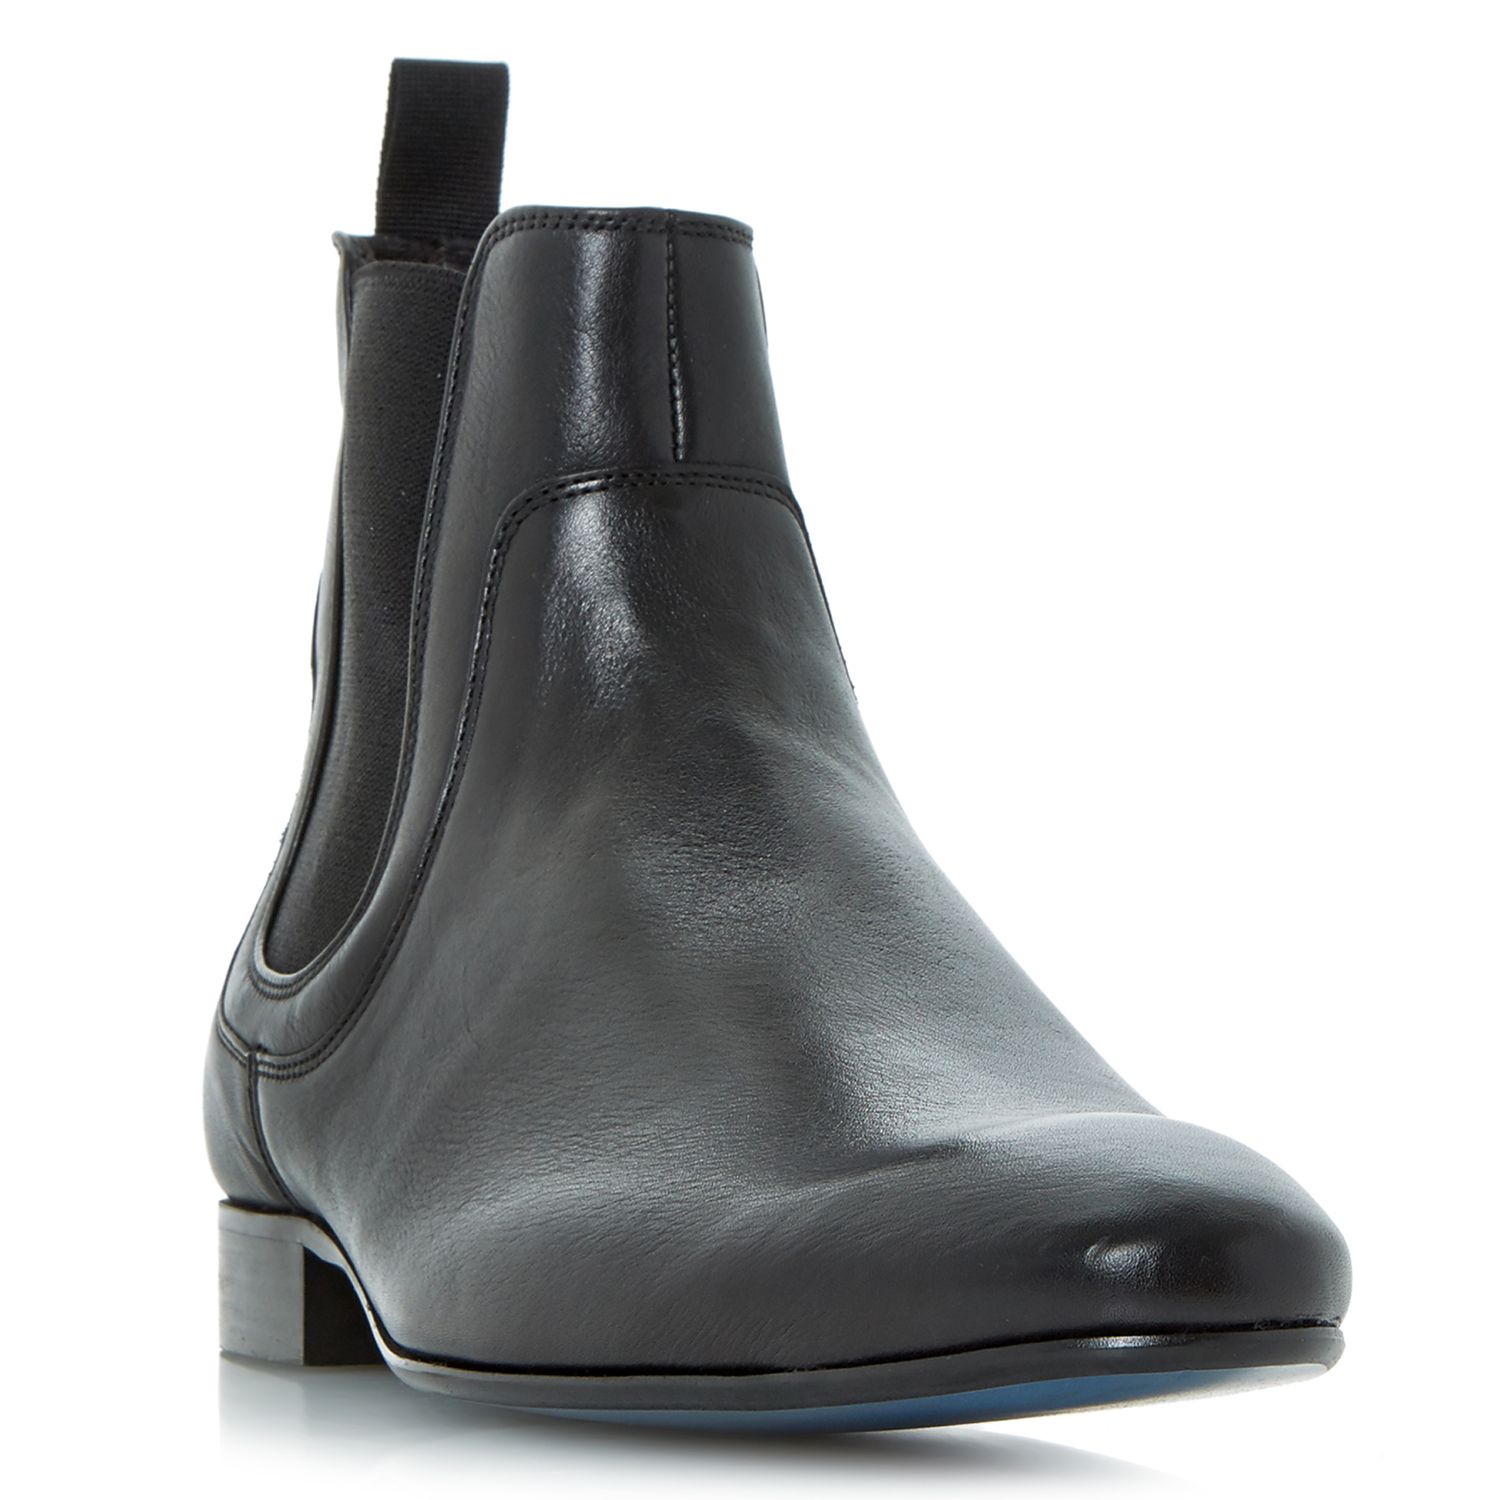 Bertie Maple Leather Chelsea Boots, Black, 6